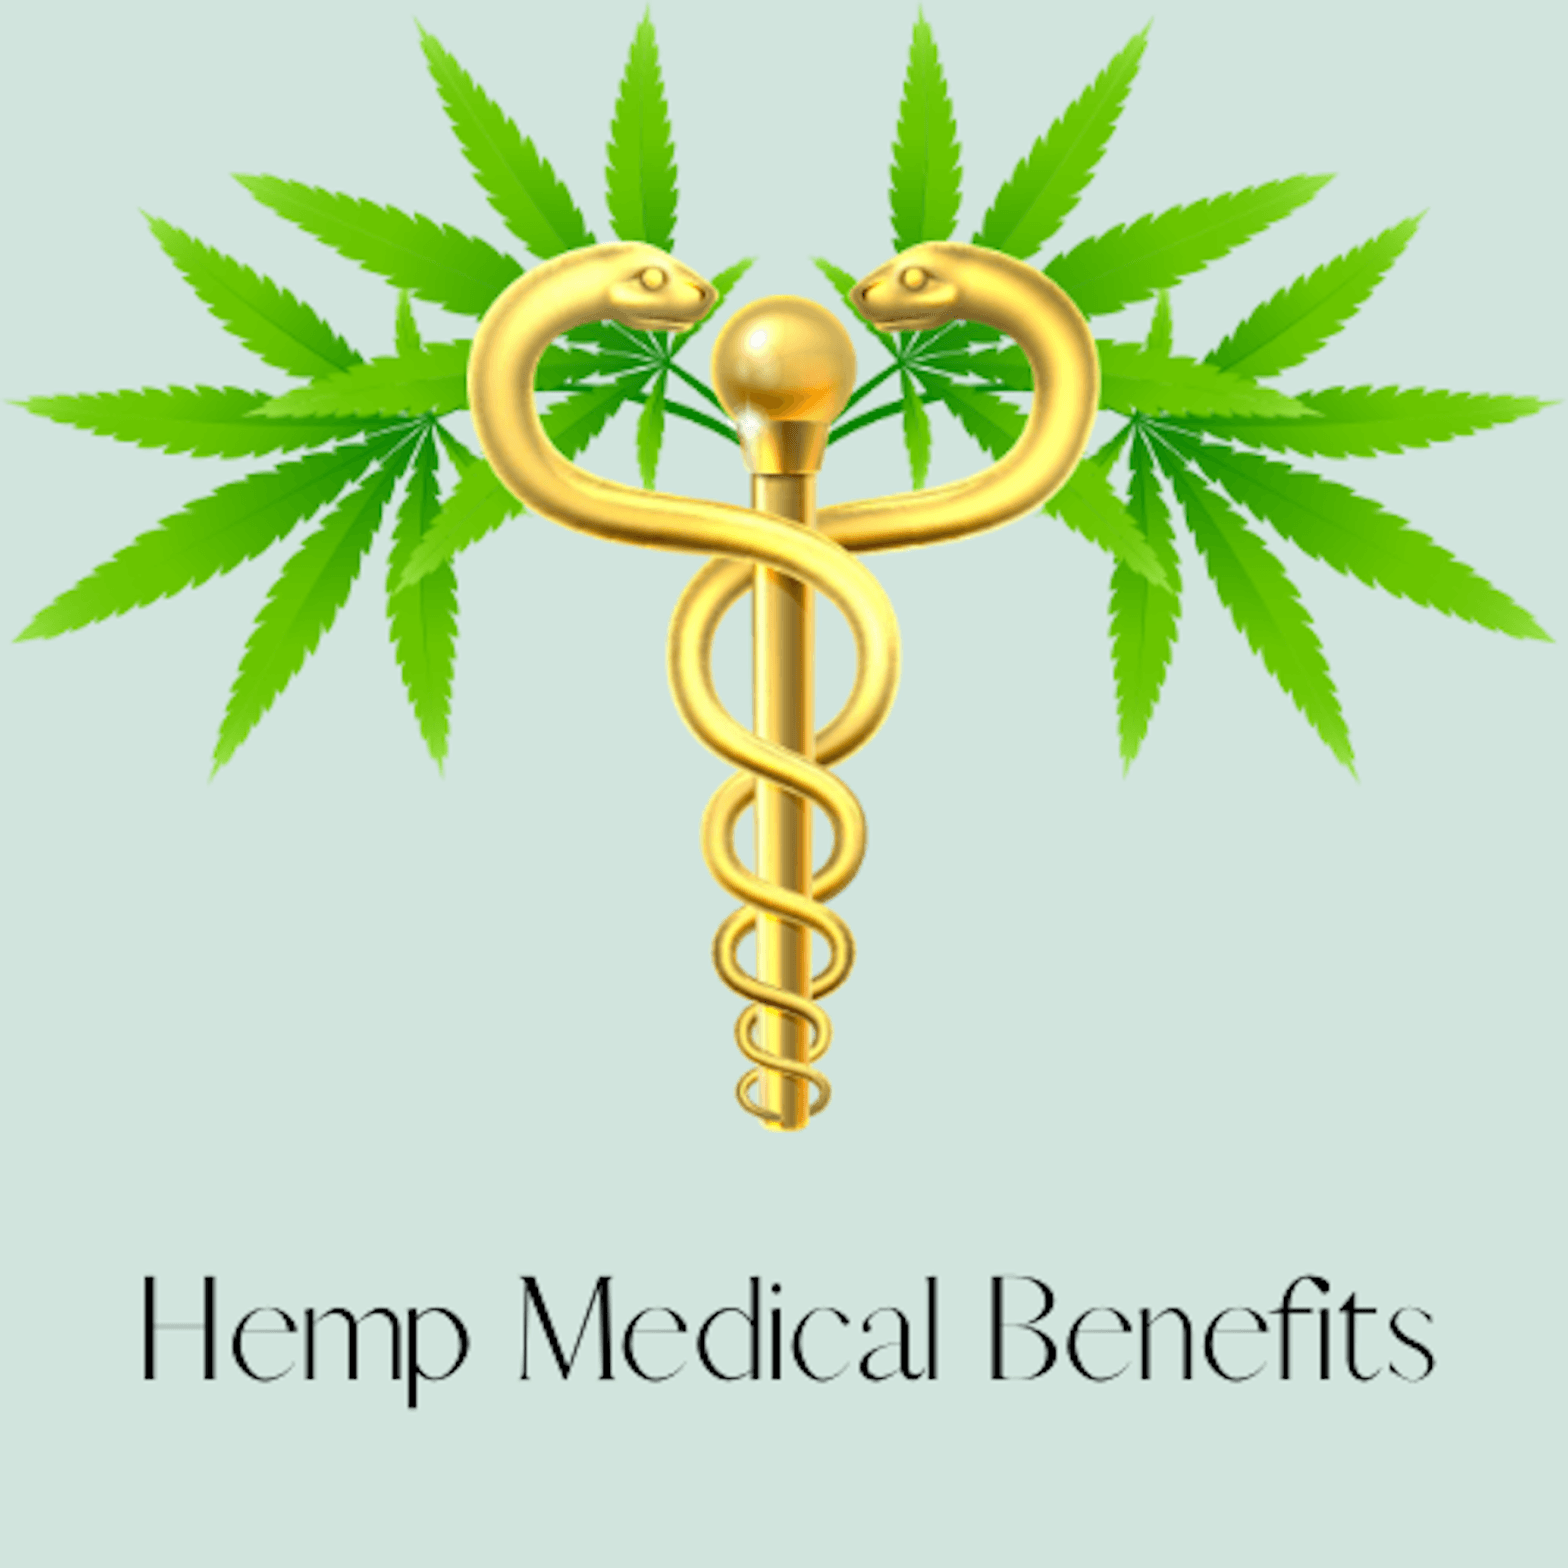 Hemp Medical Benefits